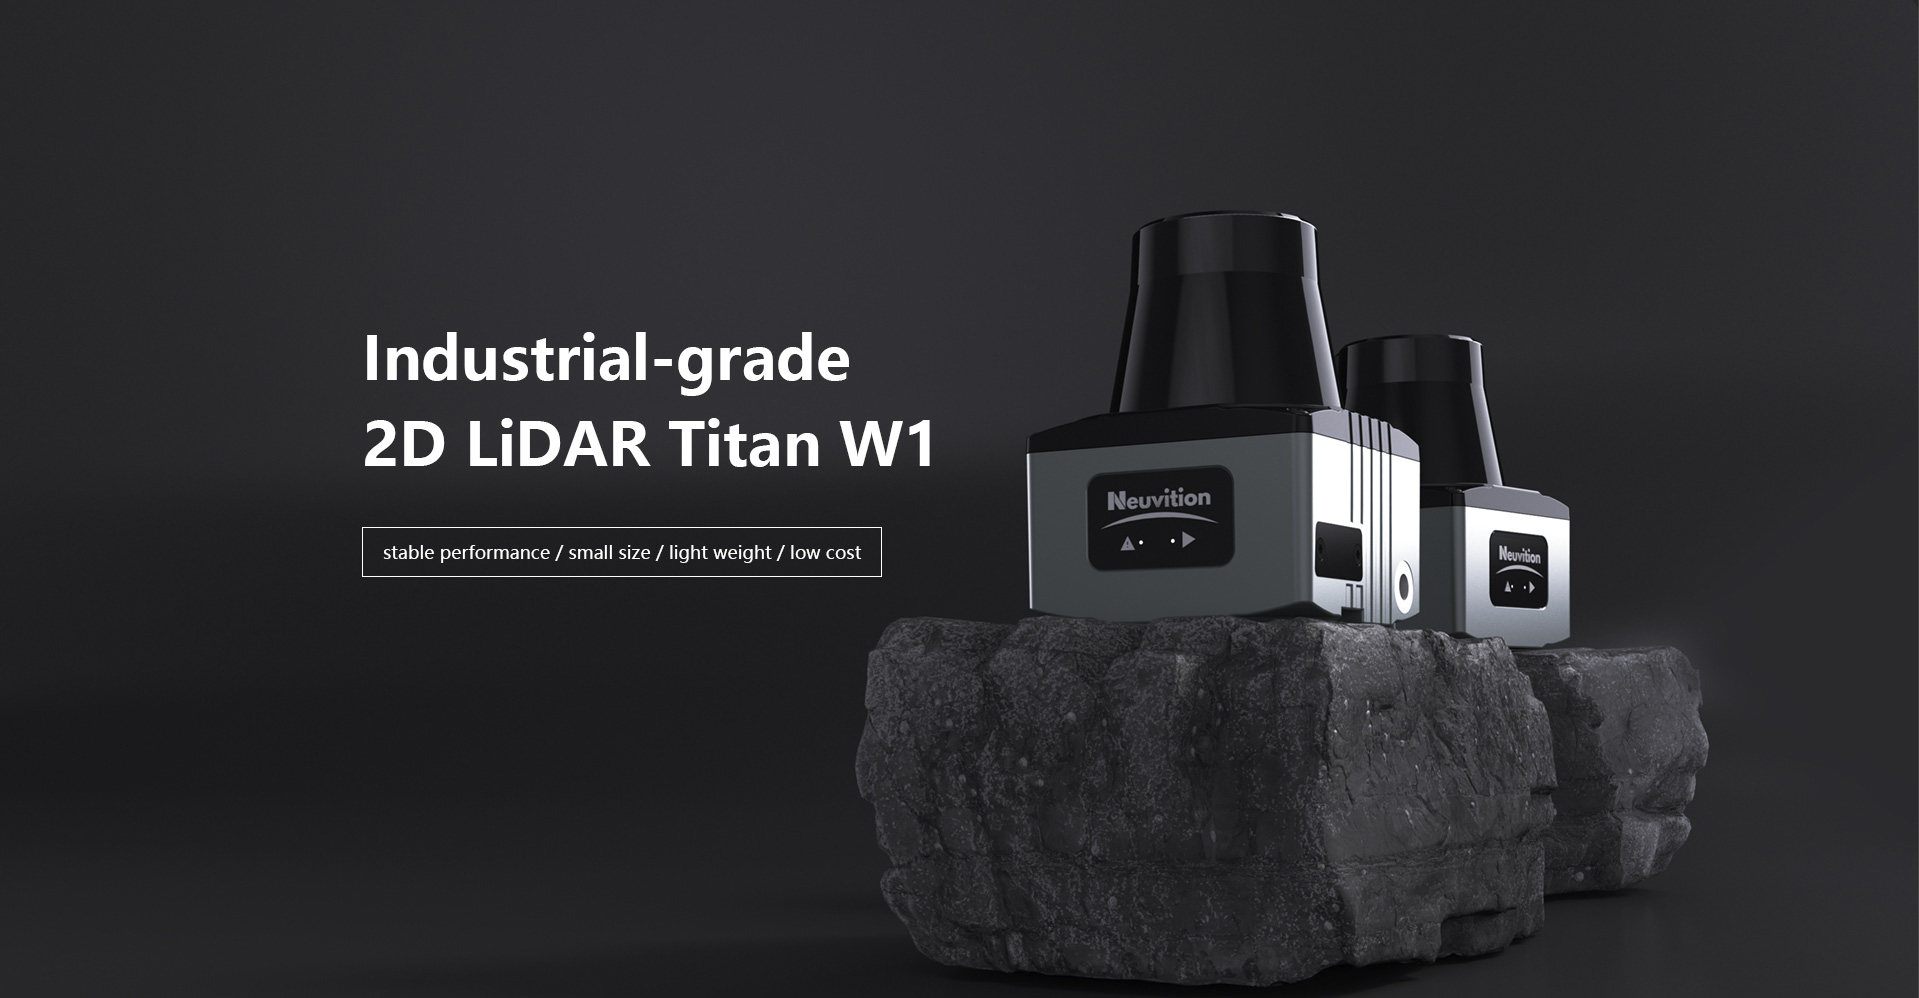 Neuvition 2D LiDAR Titan W1 for Robotics